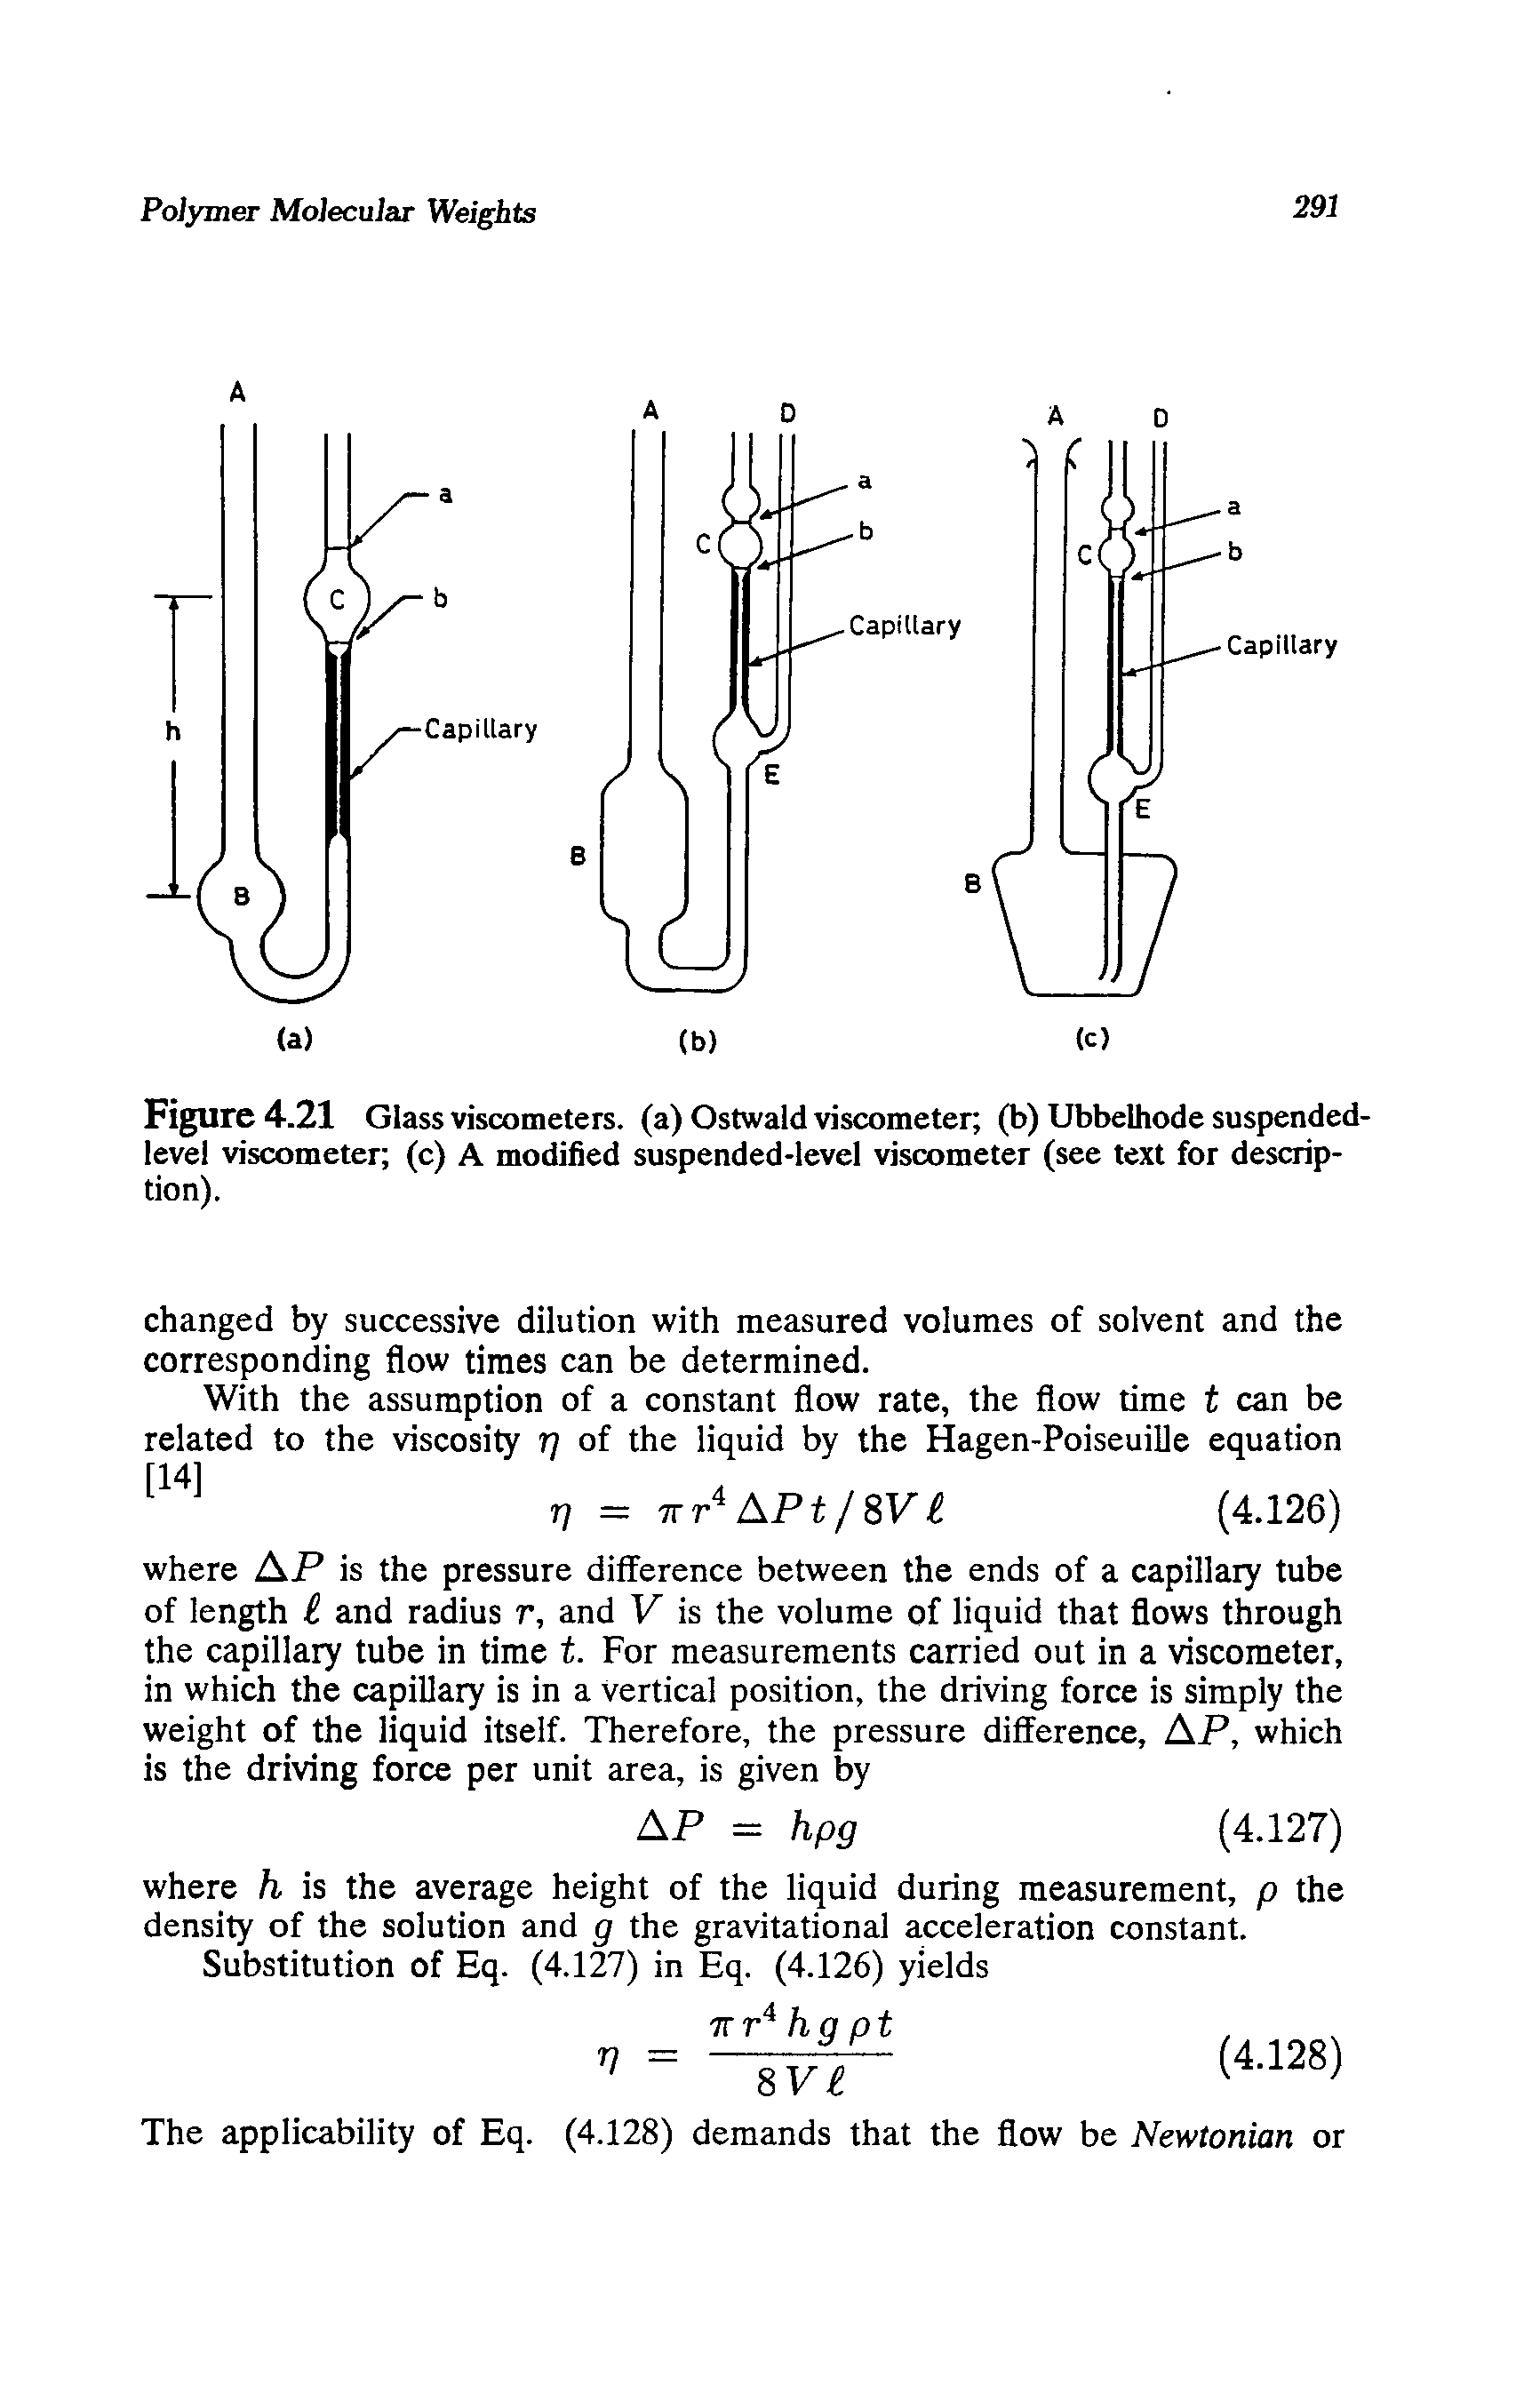 Figure 4.21 Glass viscometers, (a) Ostwald viscometer (b) Ubbelhode suspended-level viscometer (c) A modified suspended-level viscometer (see text for description).